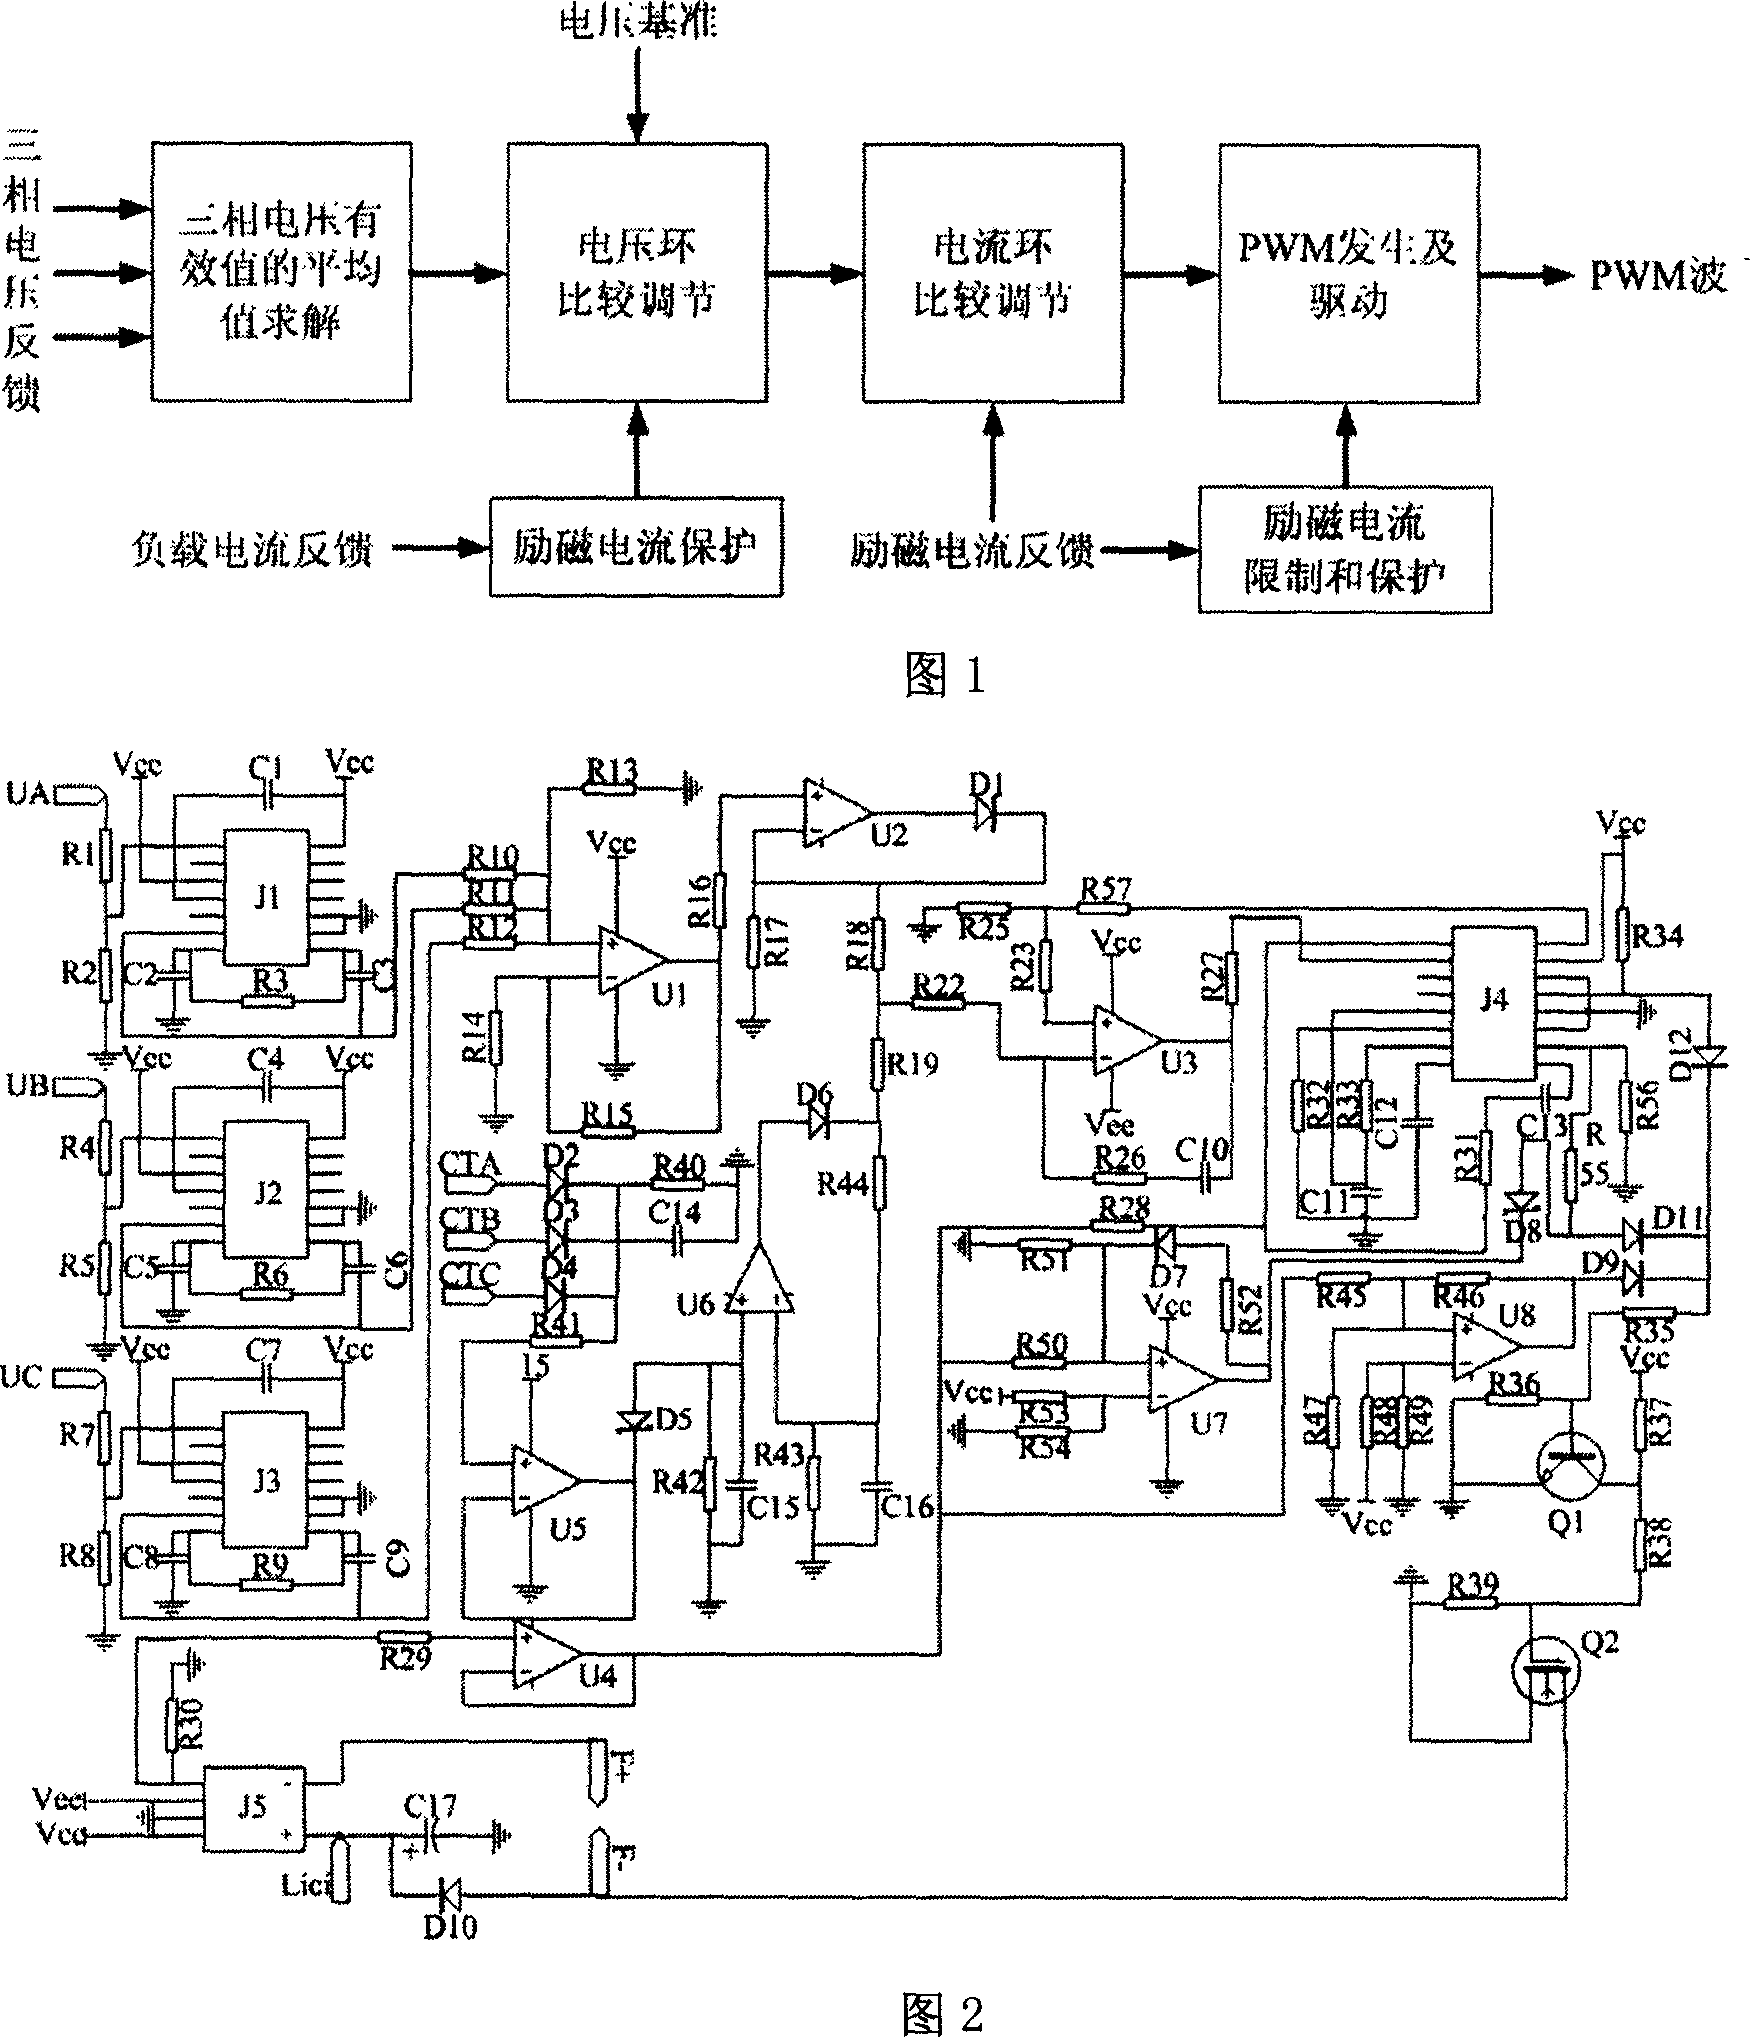 Voltage regulator of AC generator